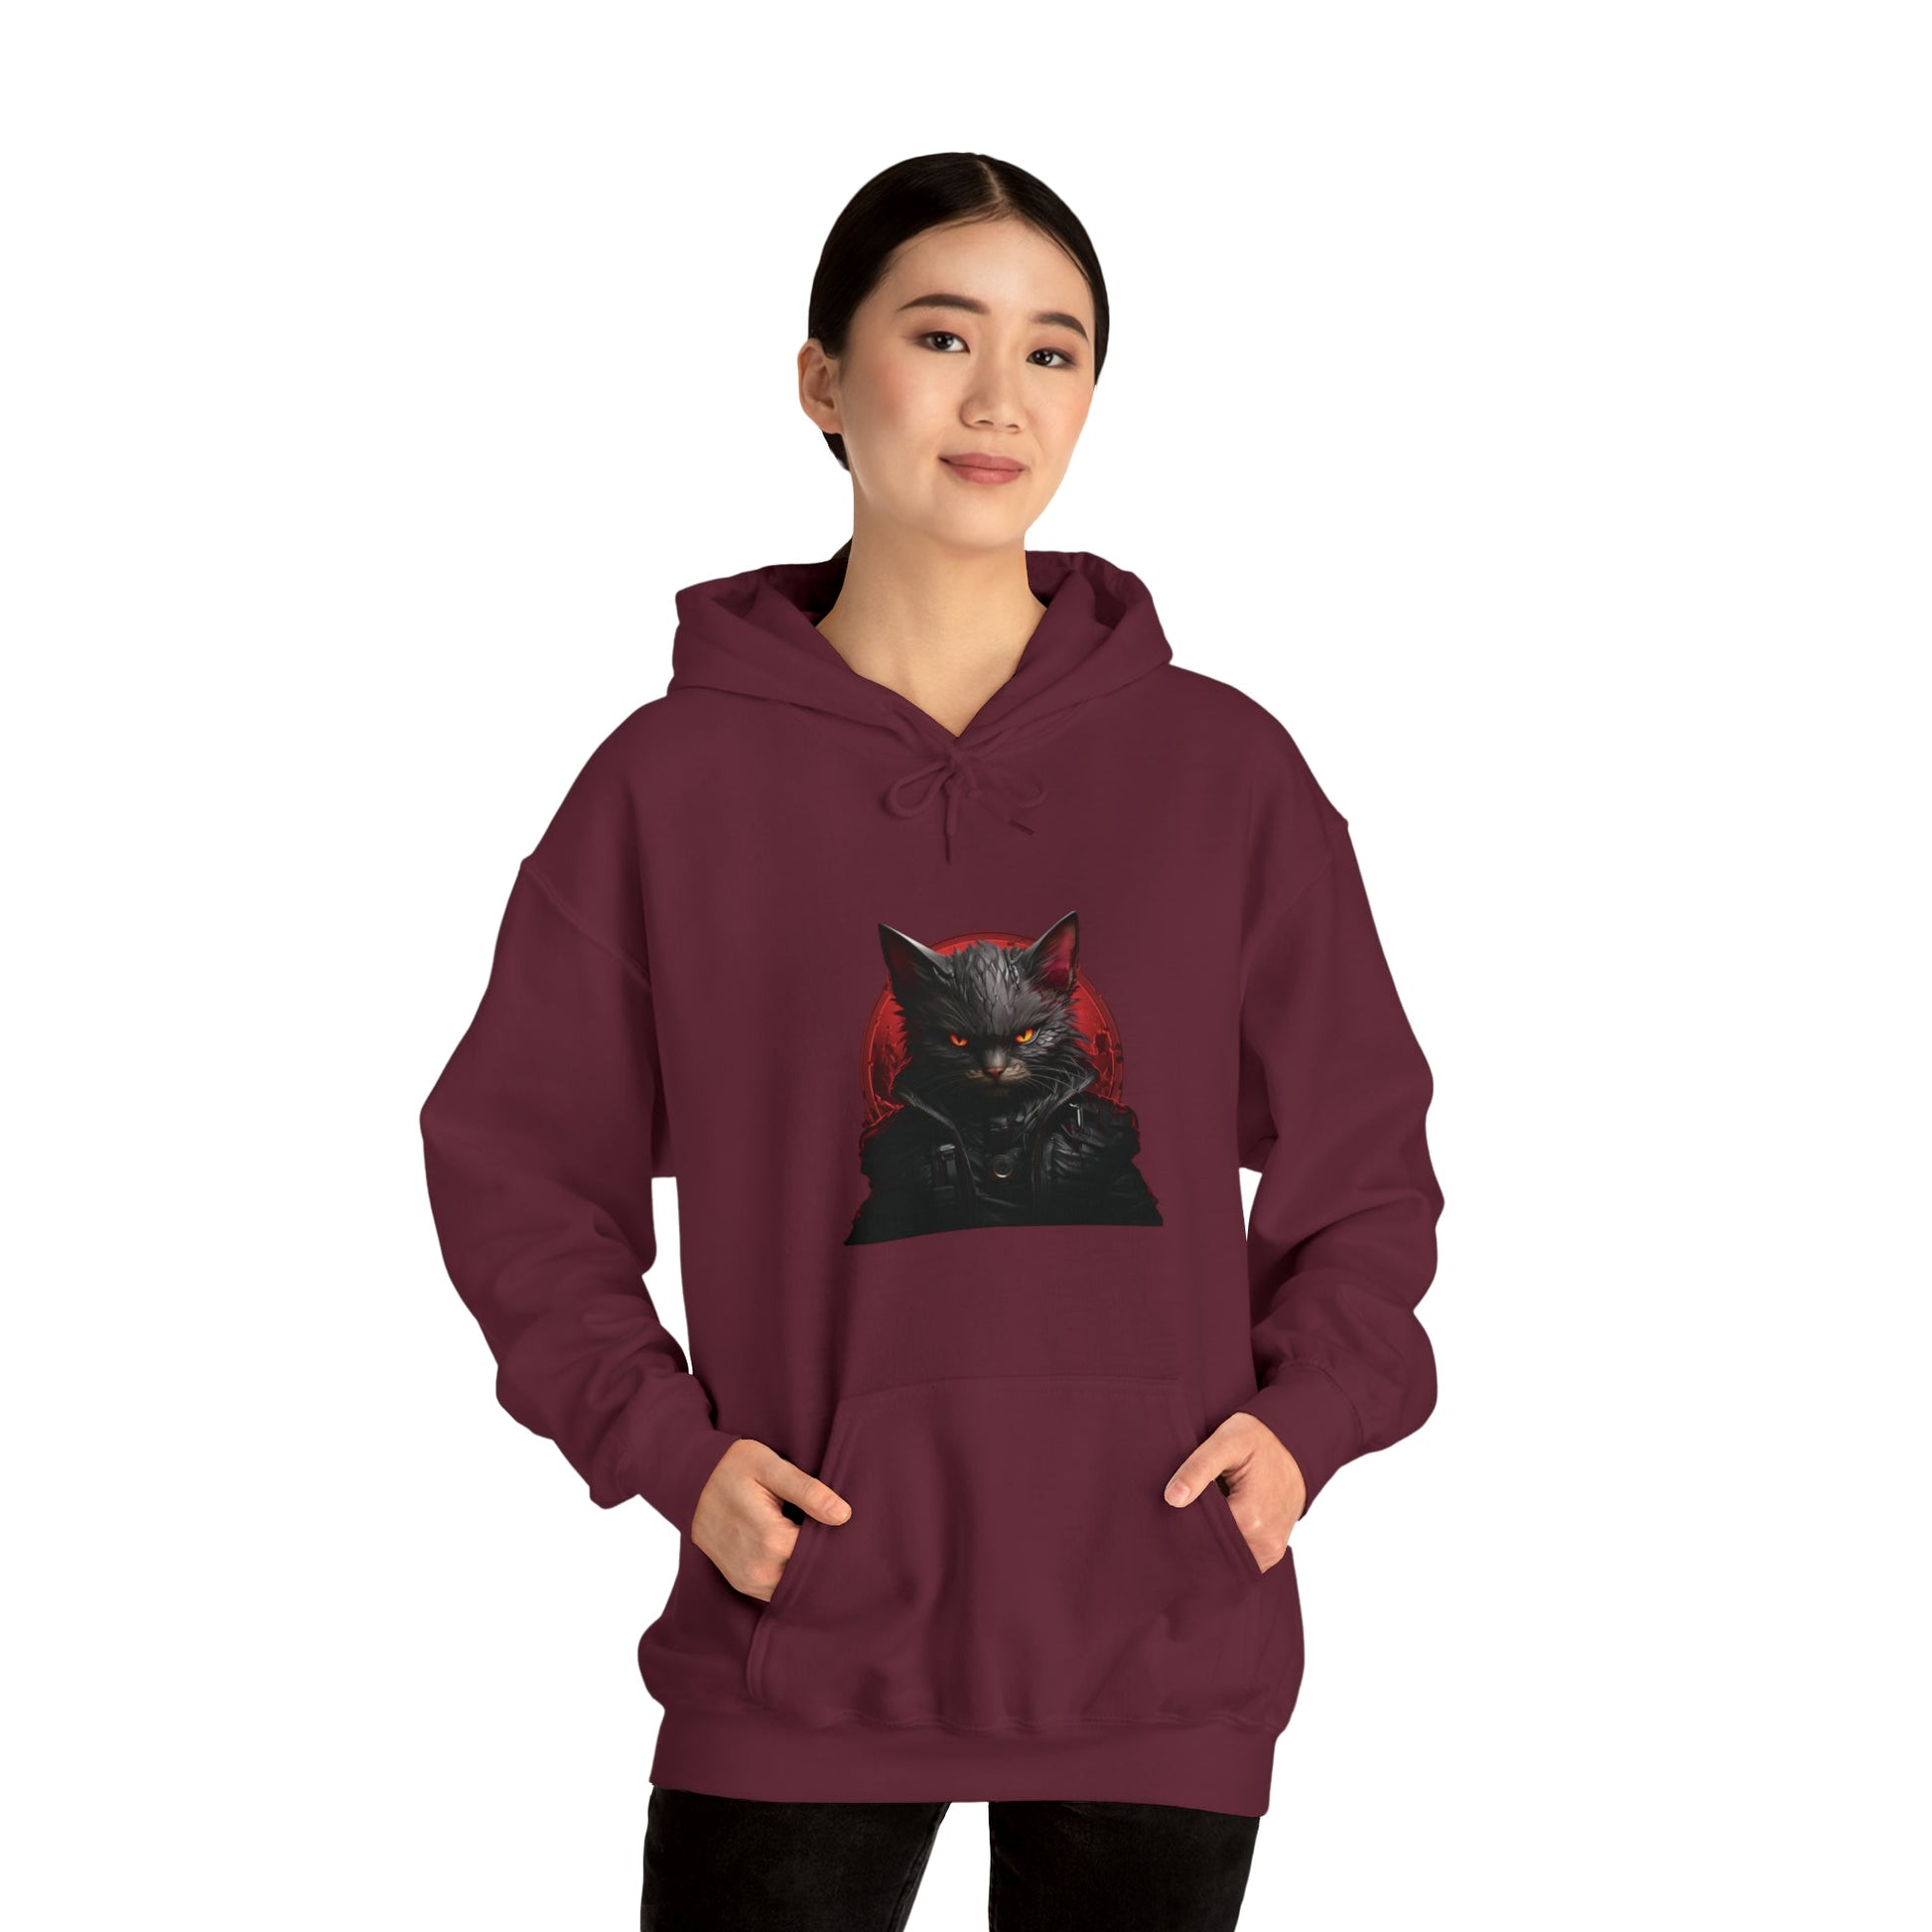 Angry Cat Hooded Sweatshirt - Kaysmar